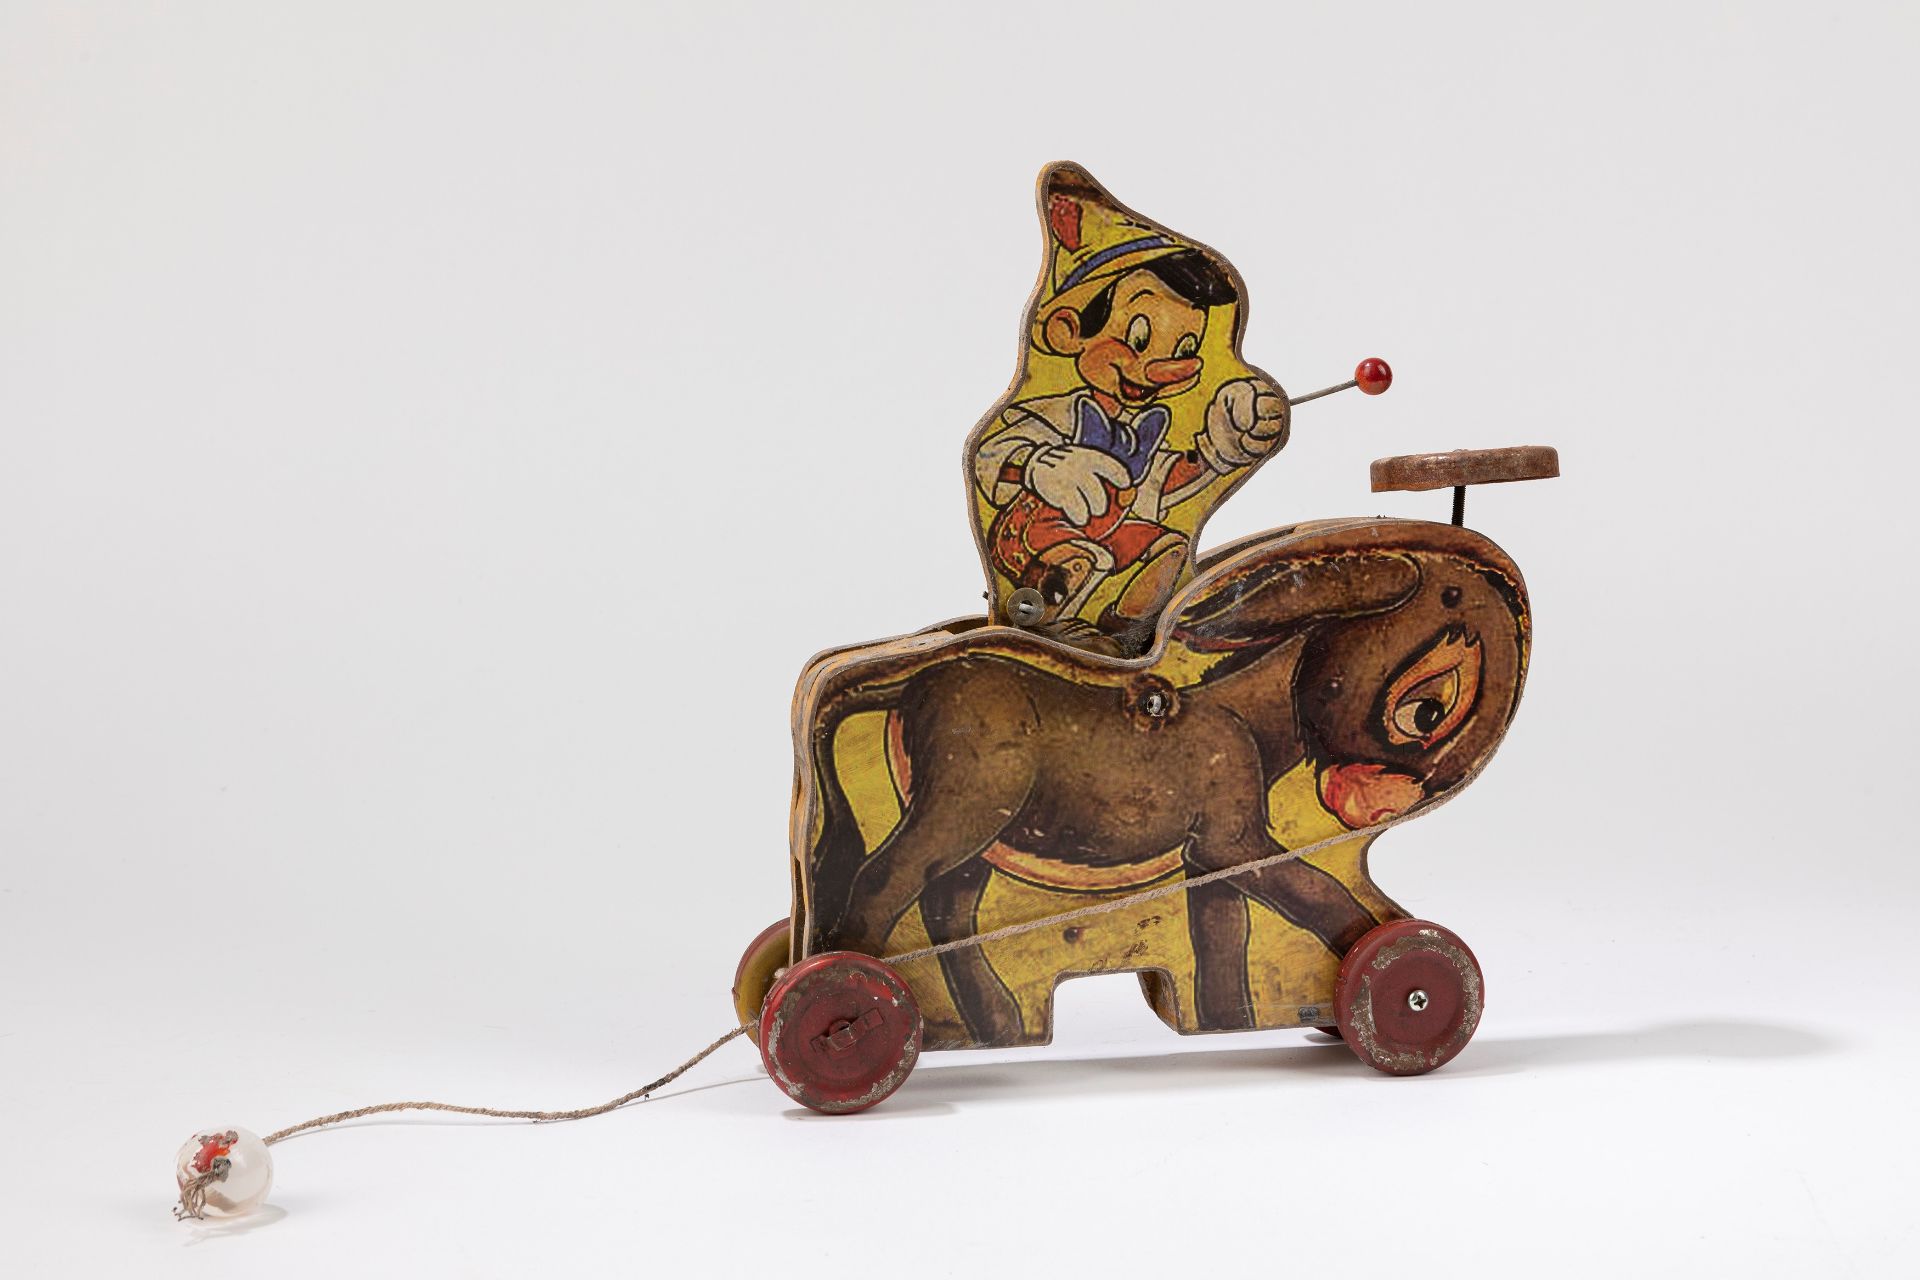 Fisher Price - Prototype of Pinocchio on donkey, 1940-1950